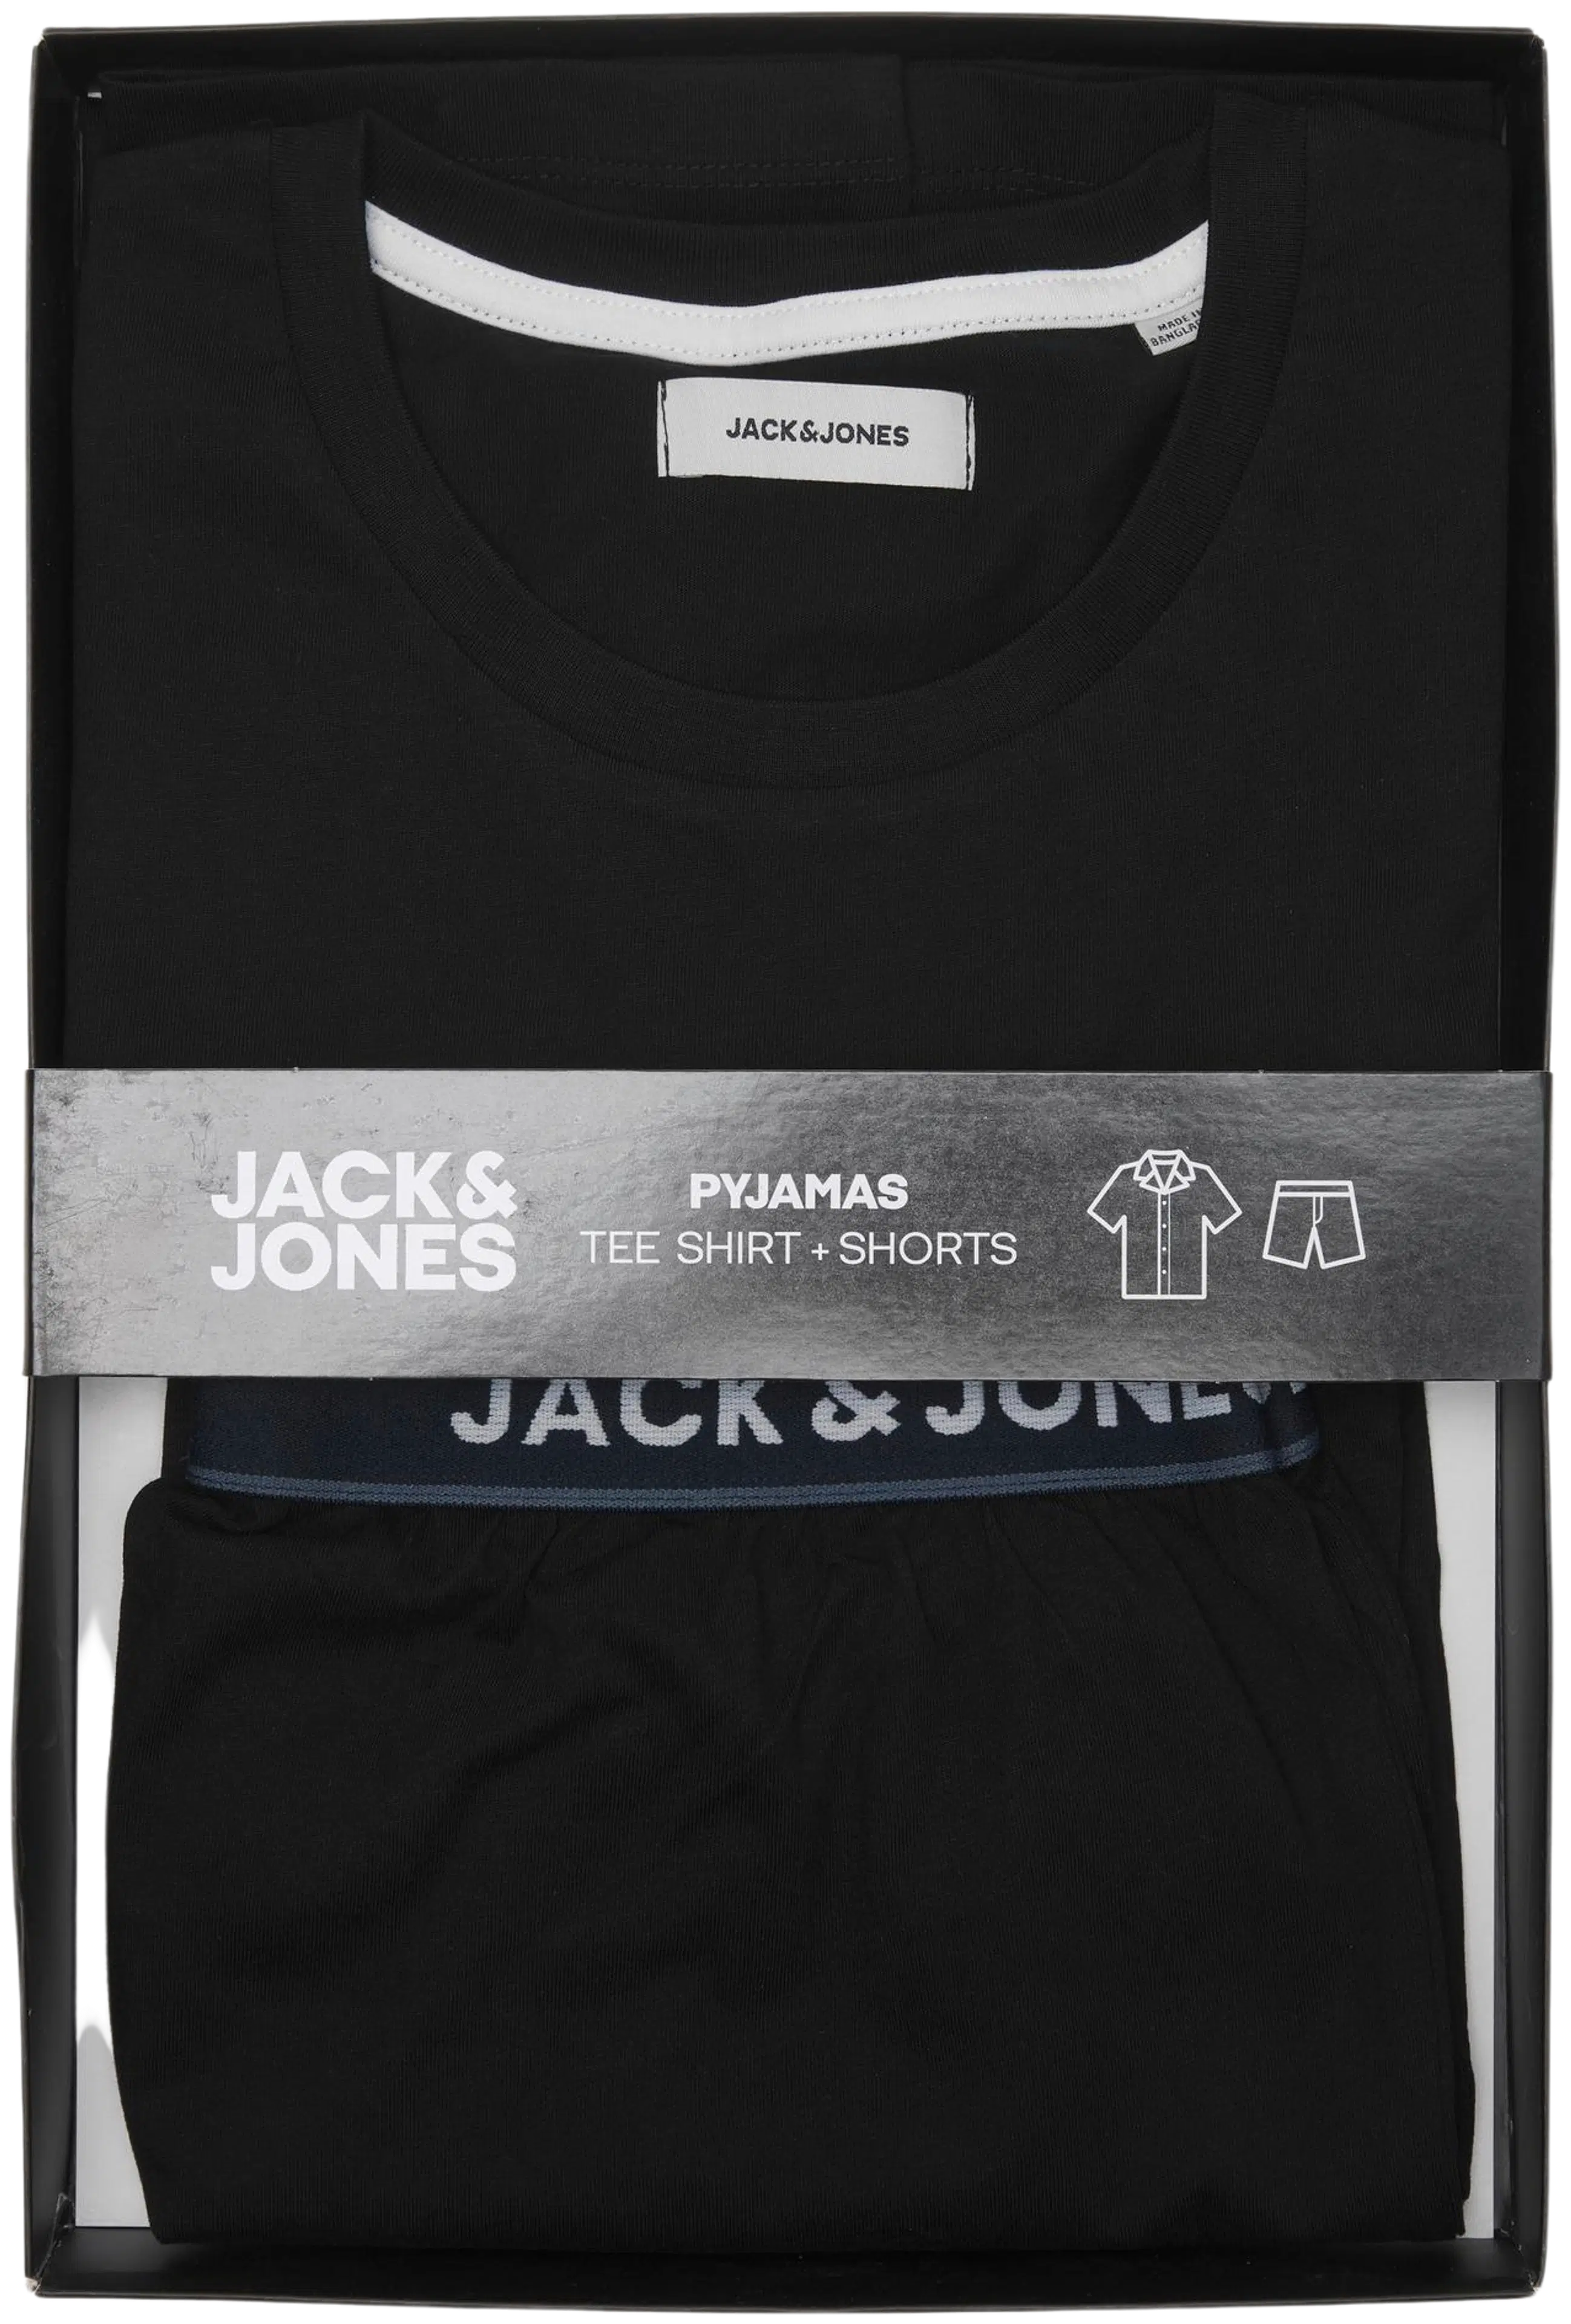 Jack&Jones Jackyle shortsipyjama